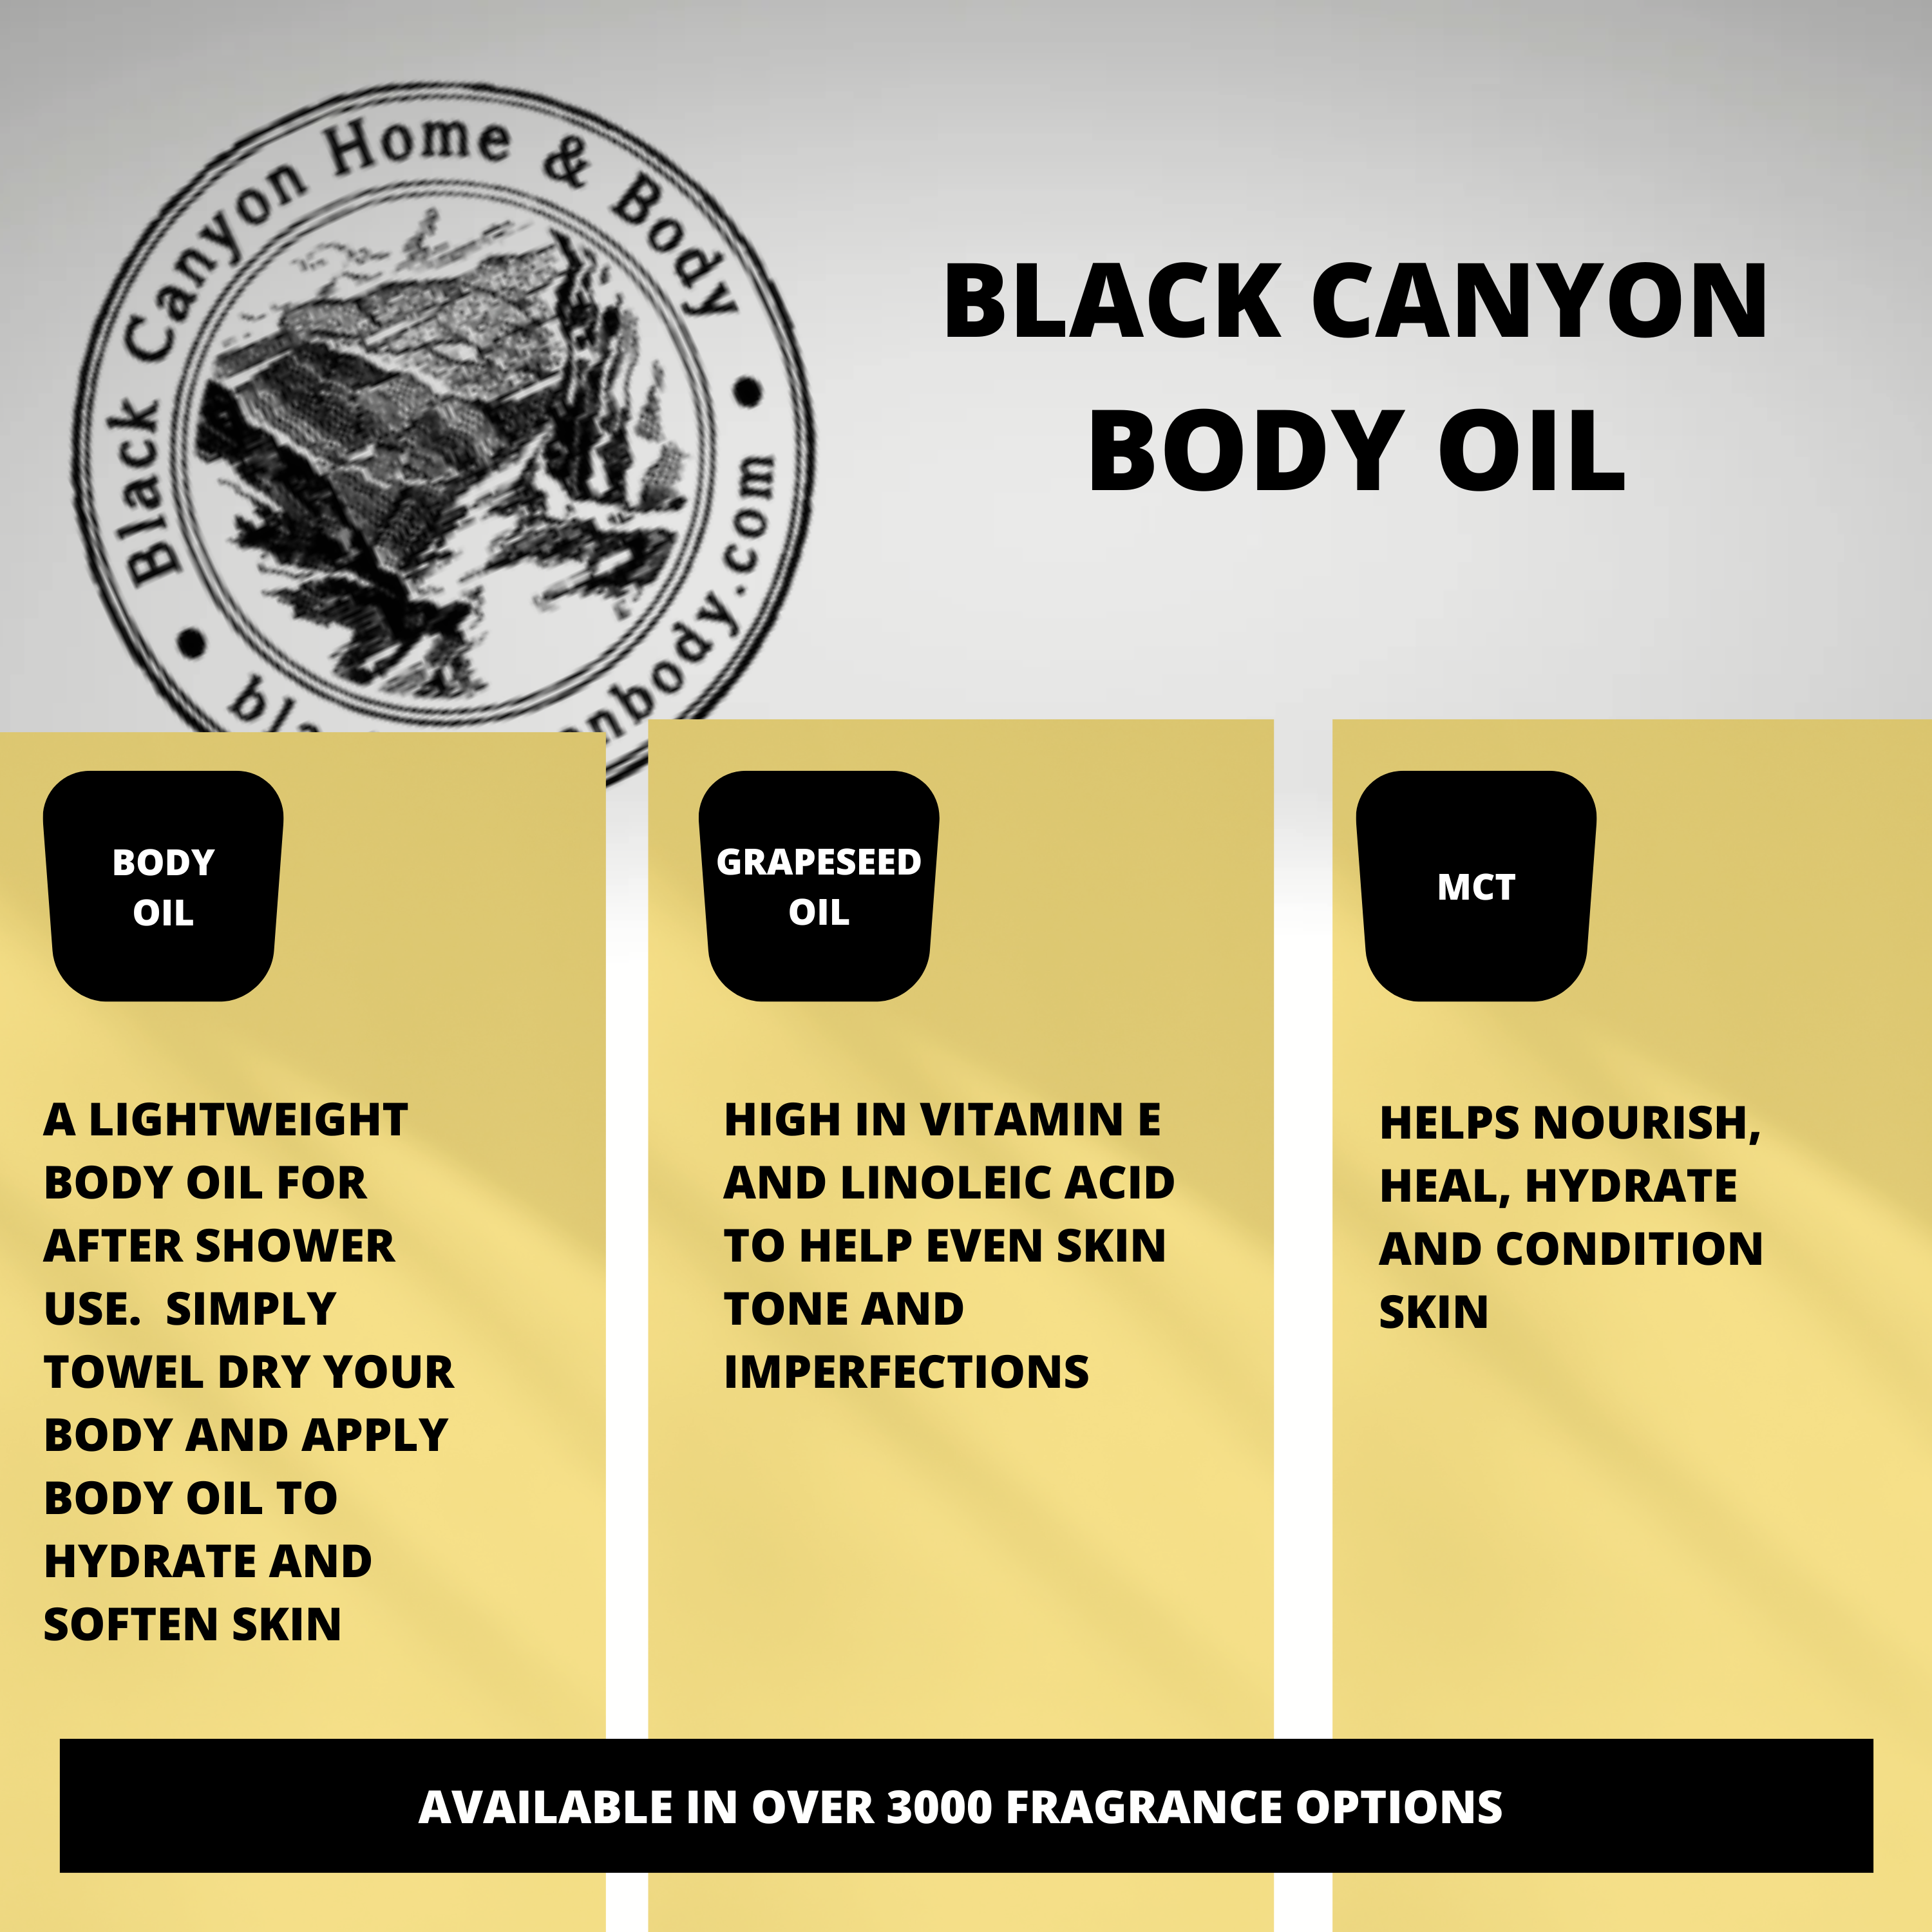 Black Canyon Banana Cream Pie Scented Body Oil